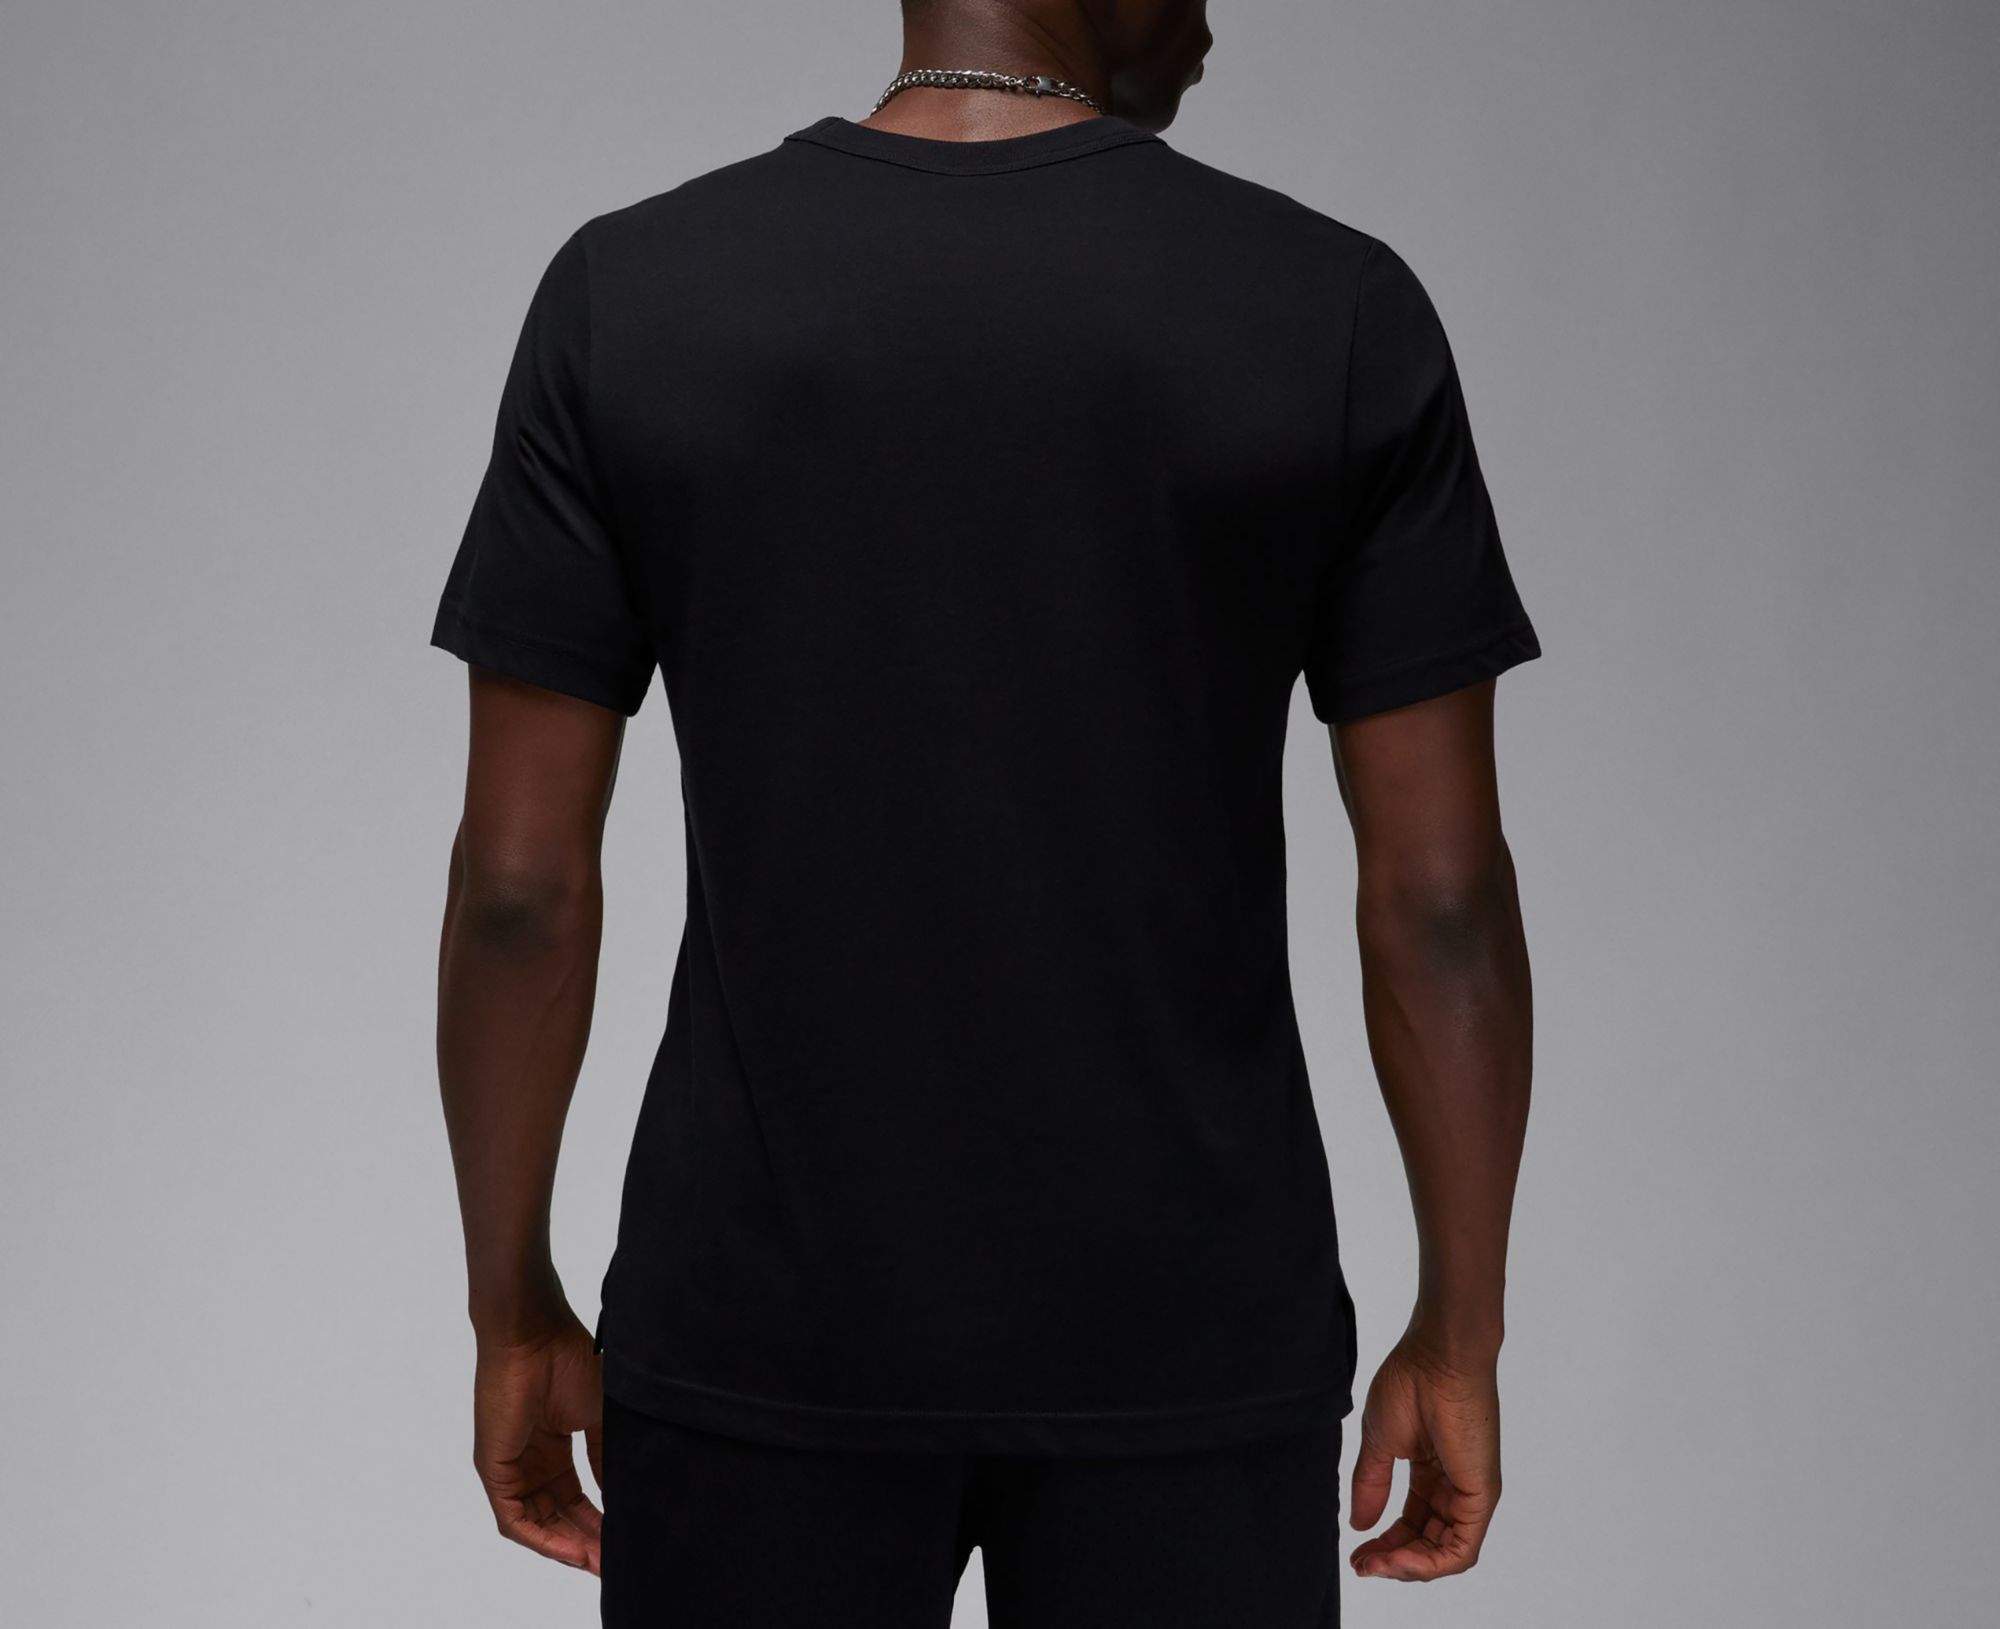 Jordan Men's Dri-FIT Sport Performance Short Sleeve T-Shirt